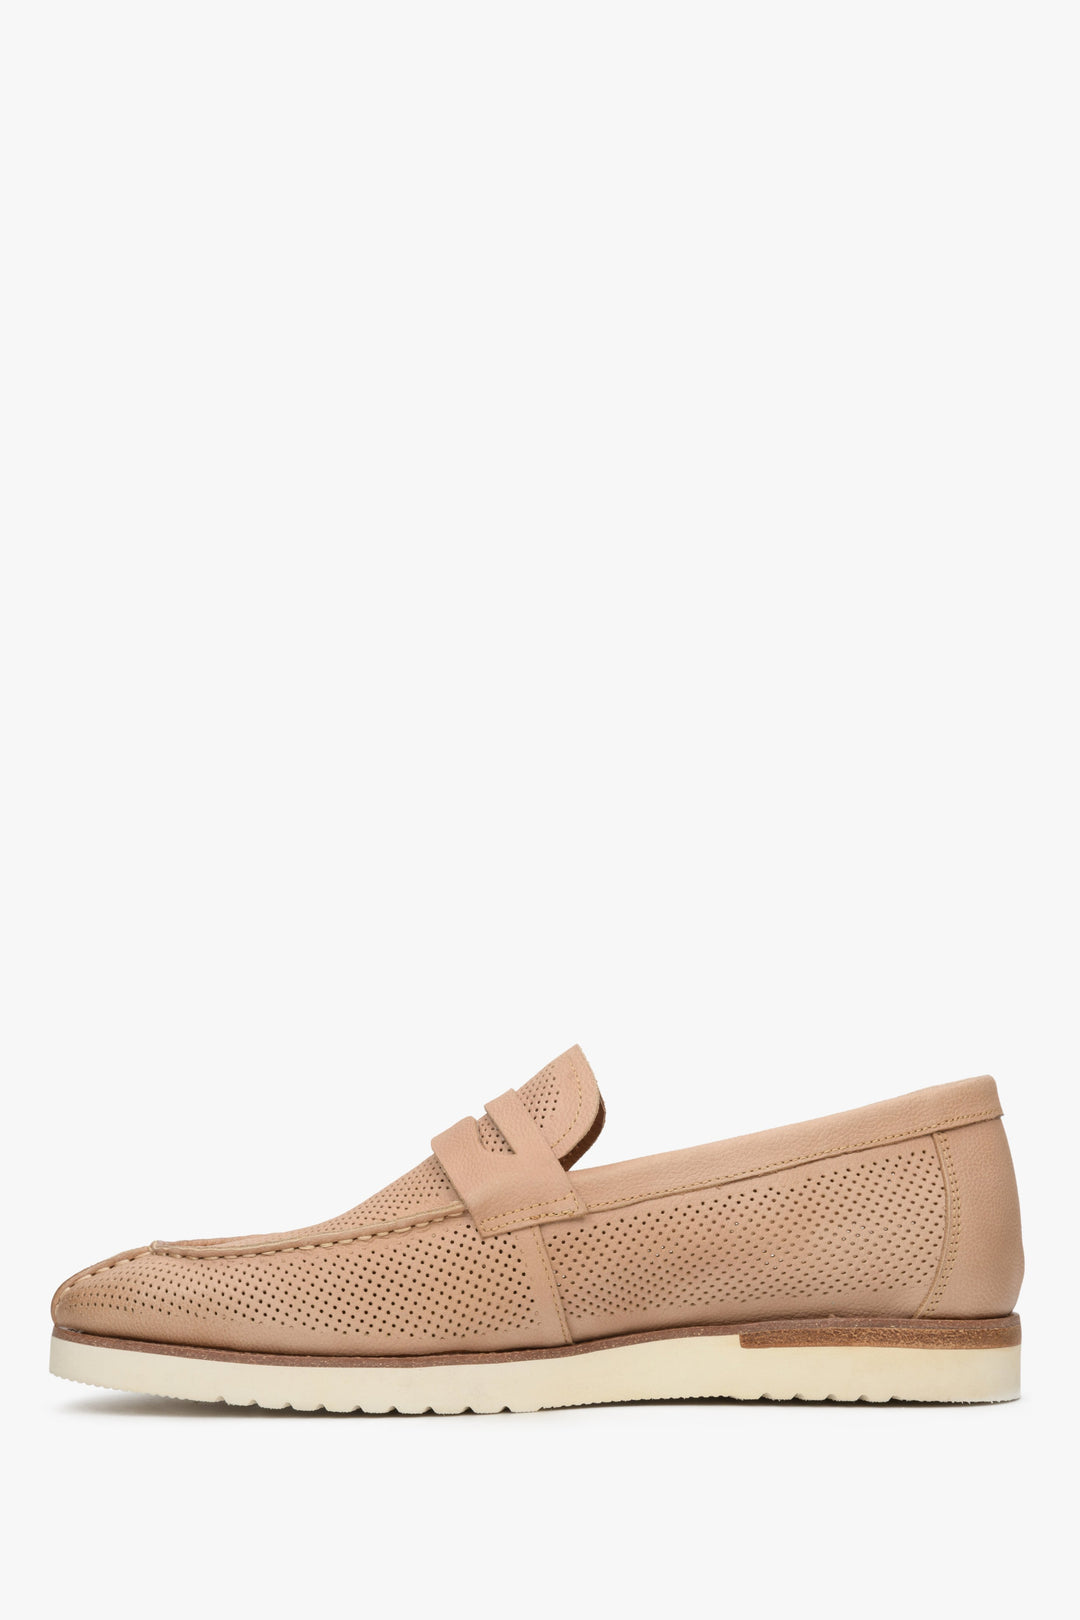 Men's beige nubuck penny loafers, perforated - shoe sideline.